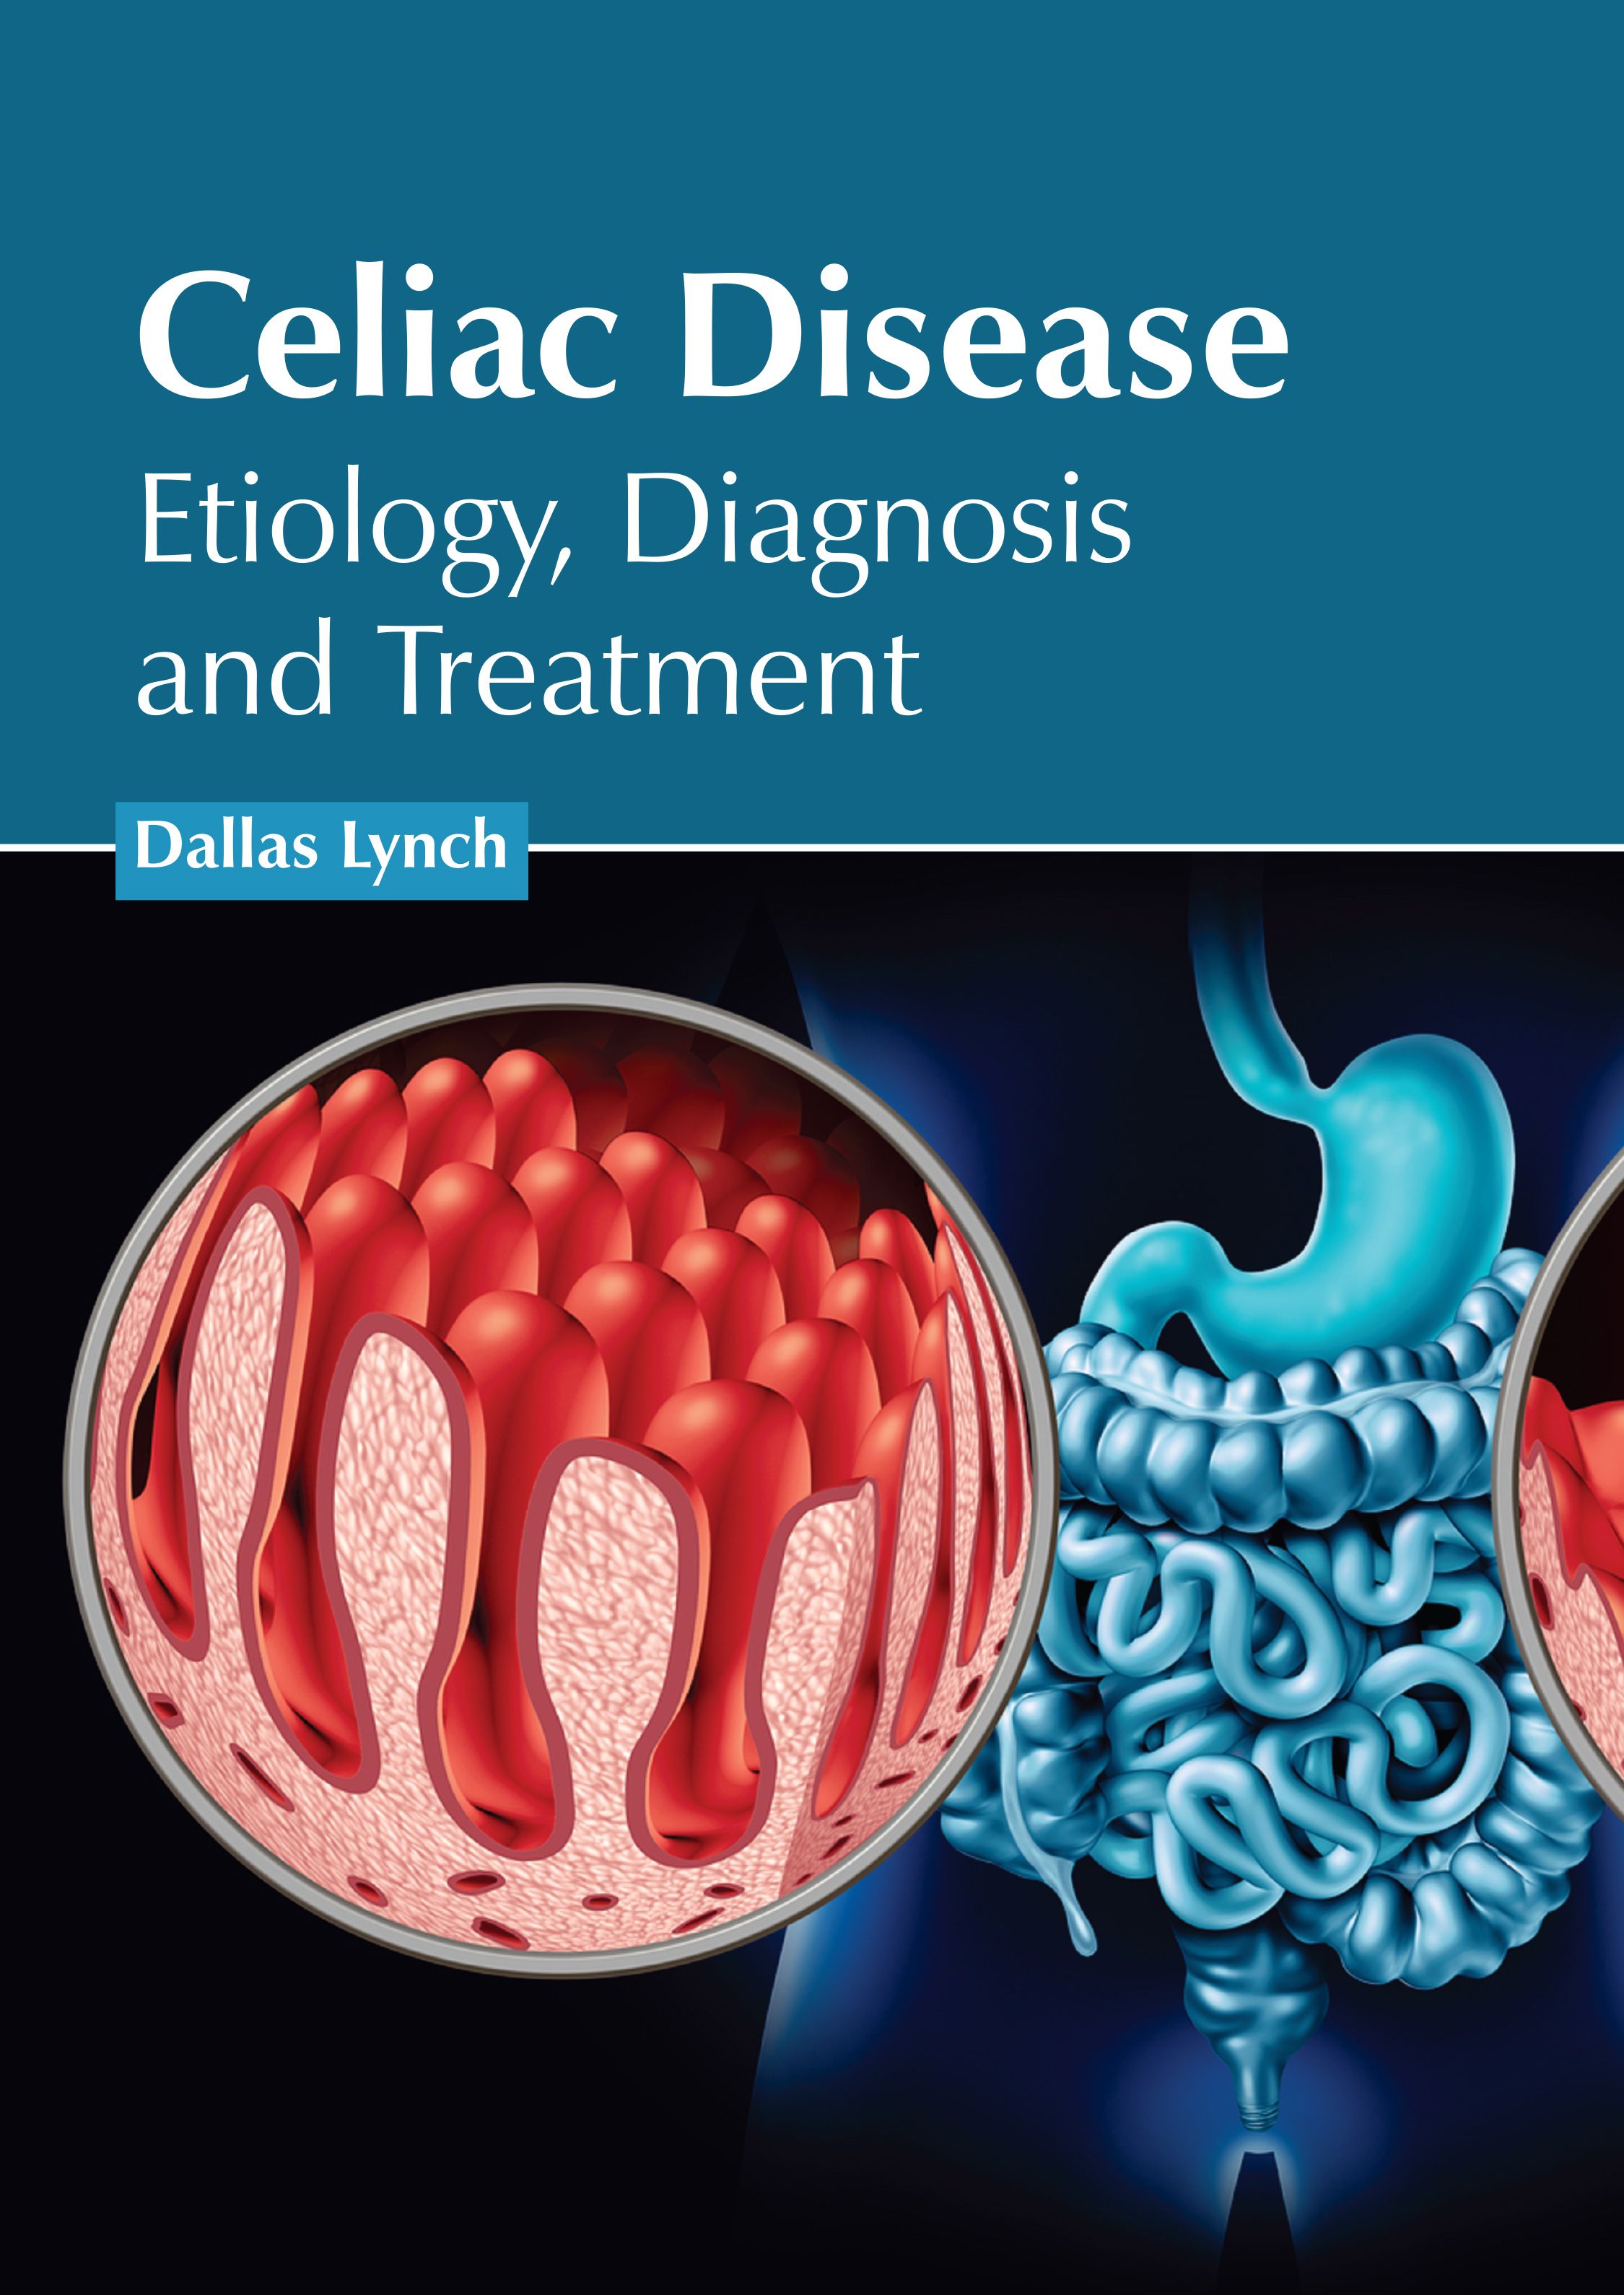 CELIAC DISEASE: ETIOLOGY, DIAGNOSIS AND TREATMENT